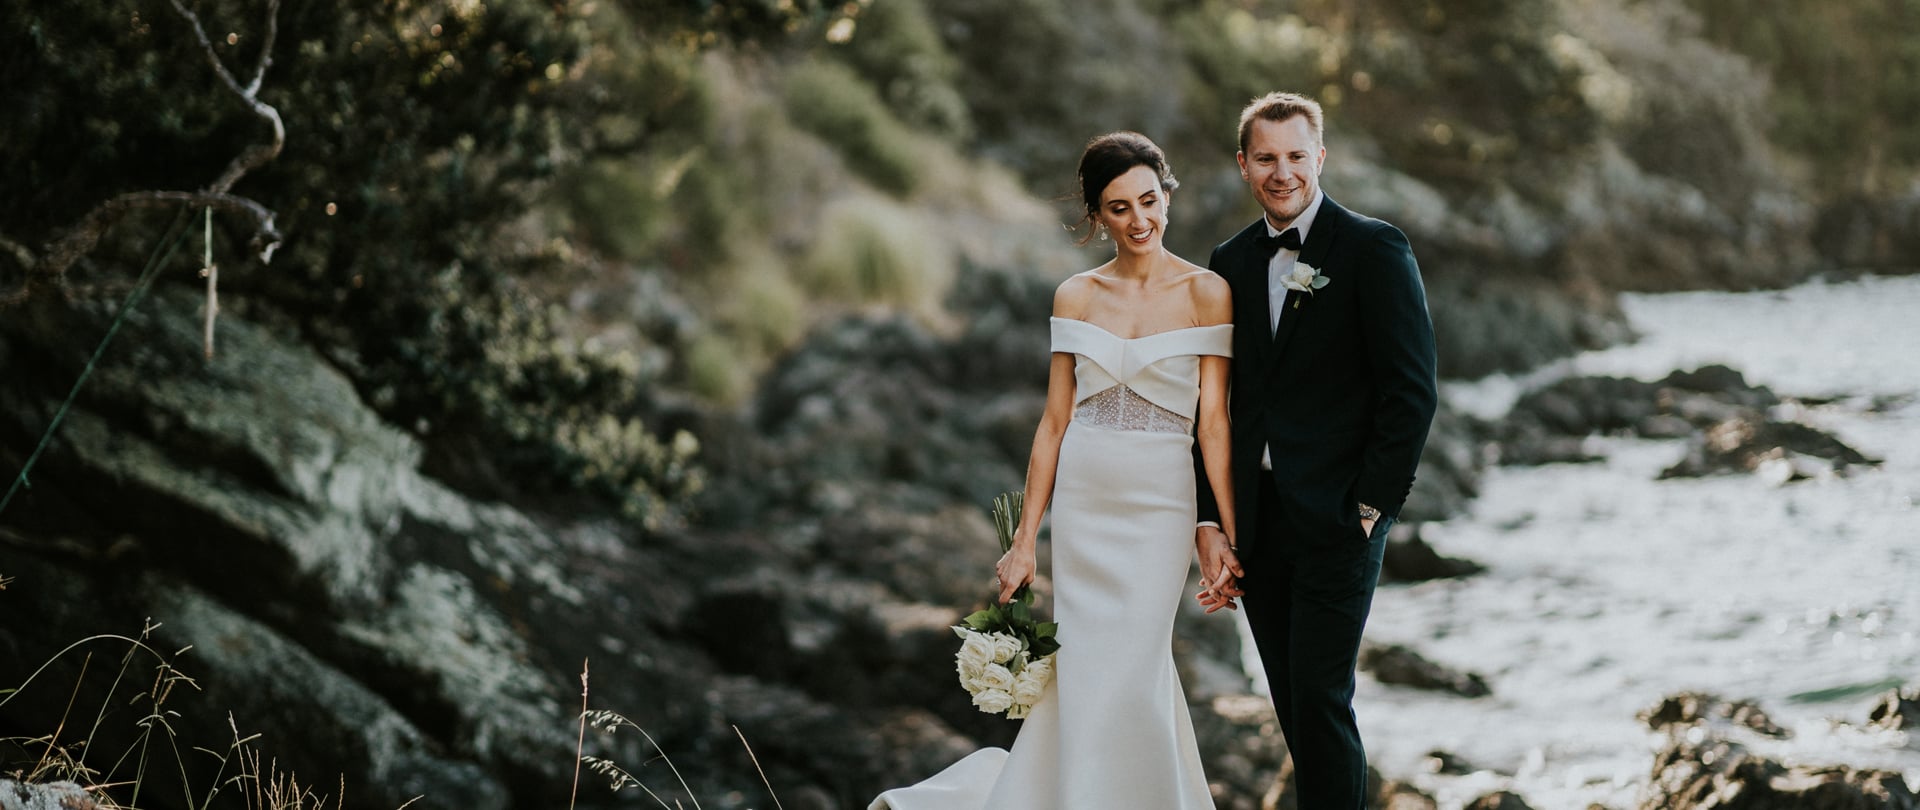 Joanna & Egon Wedding Video Filmed atWaiheke Island,New Zealand